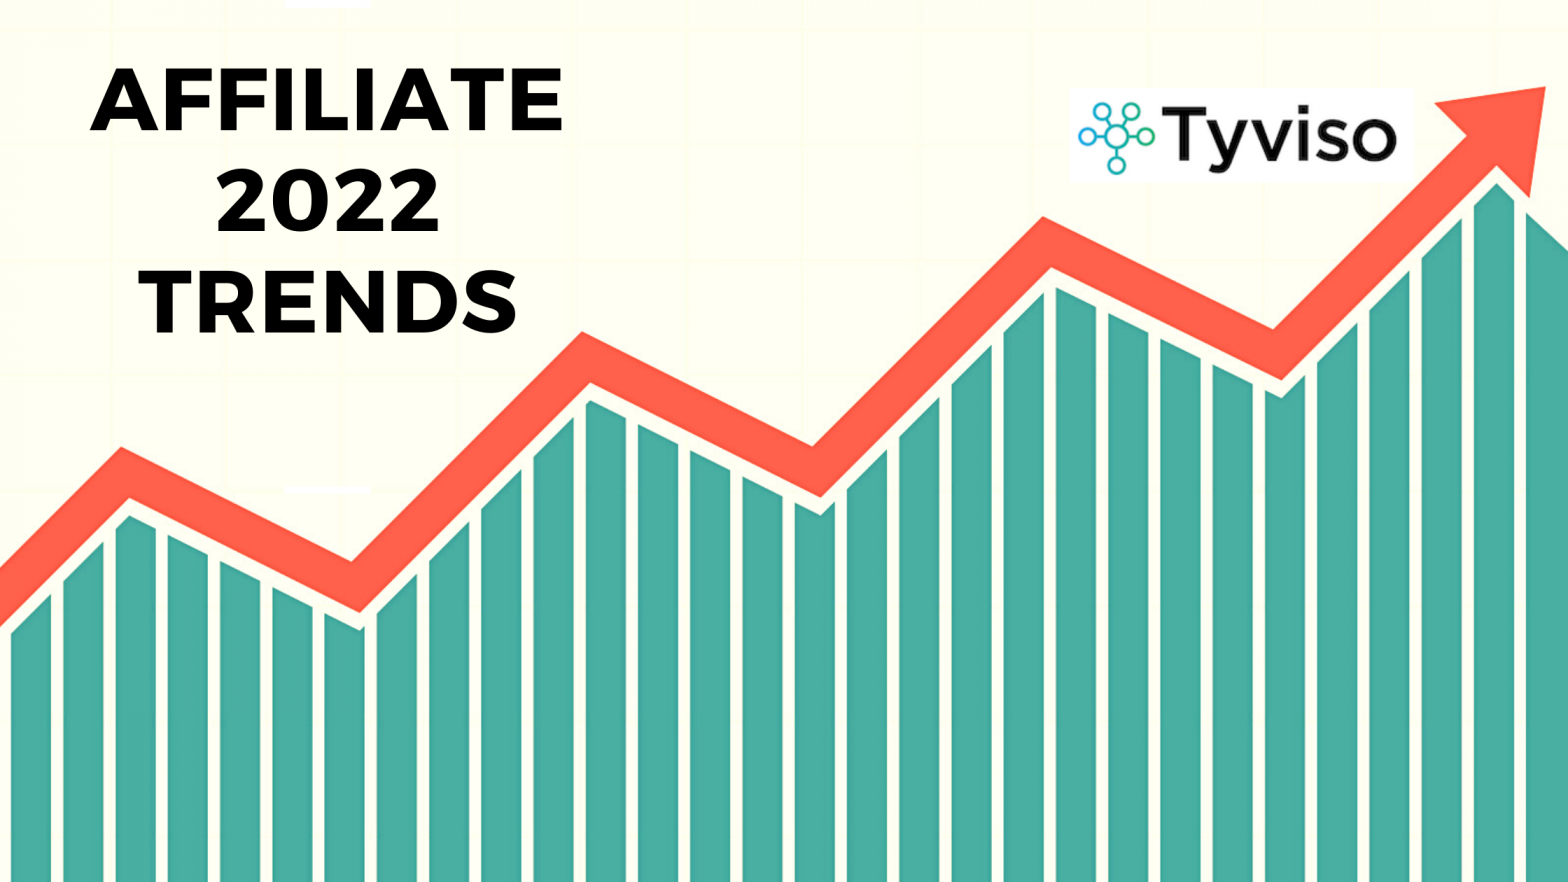 Affiliate Marketing 2022 Trends - Tyviso